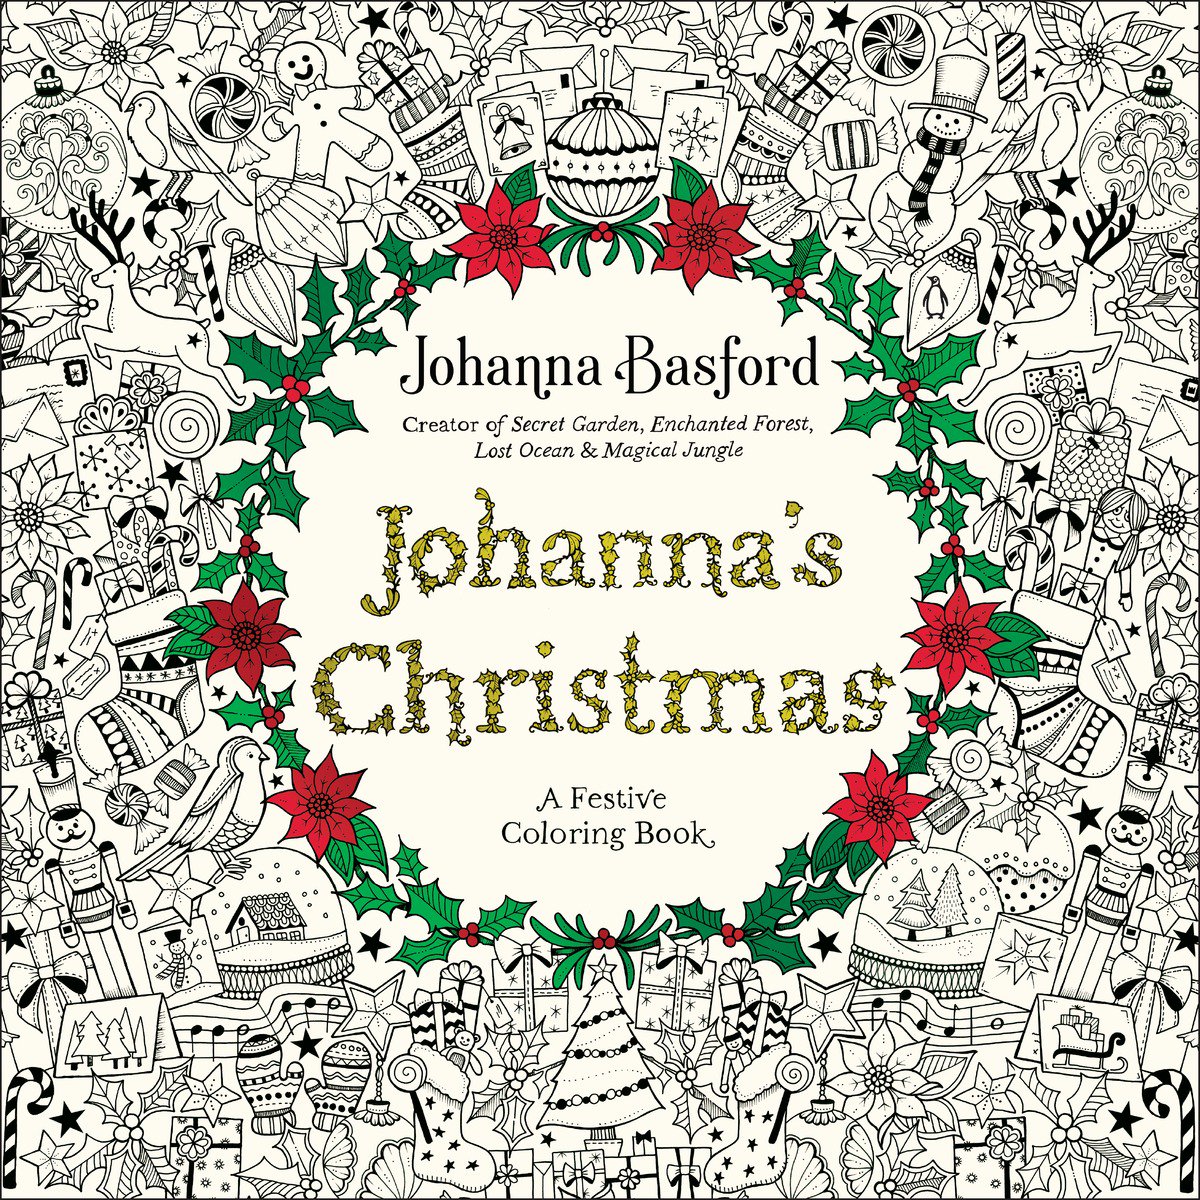 JohannaBasford is live & wearing reindeer antlers on flipping through her new book JohannasChristmas